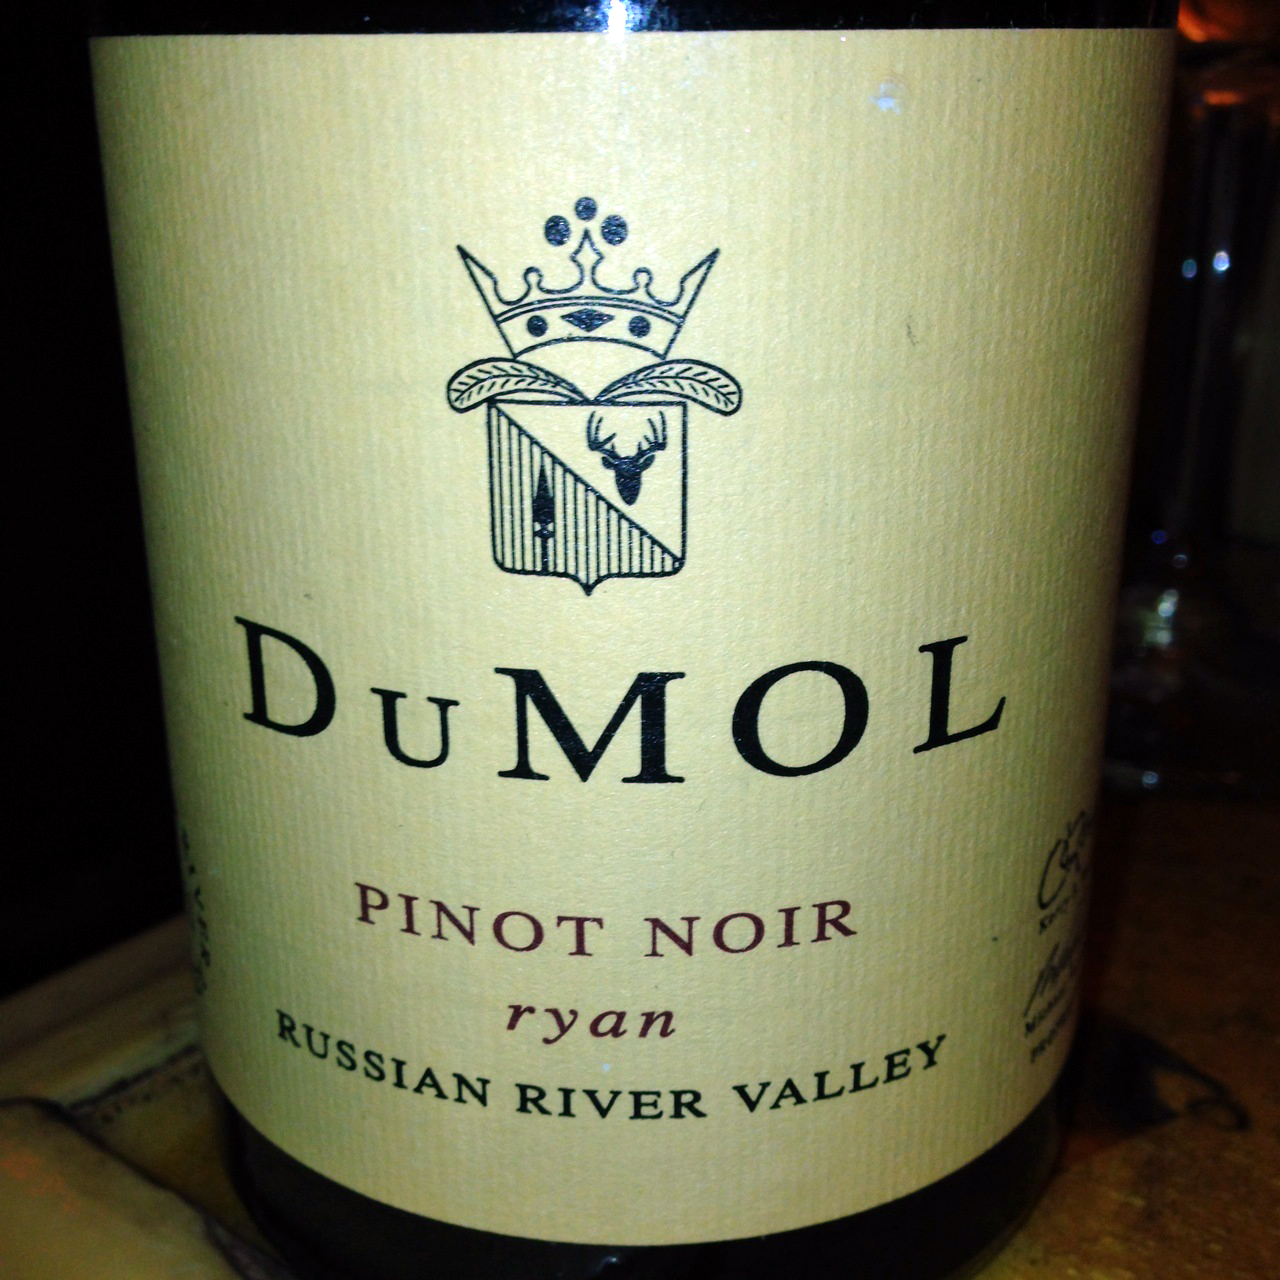 2012 DuMol Pinot Noir Ryan Russian River Valley - click image for full description